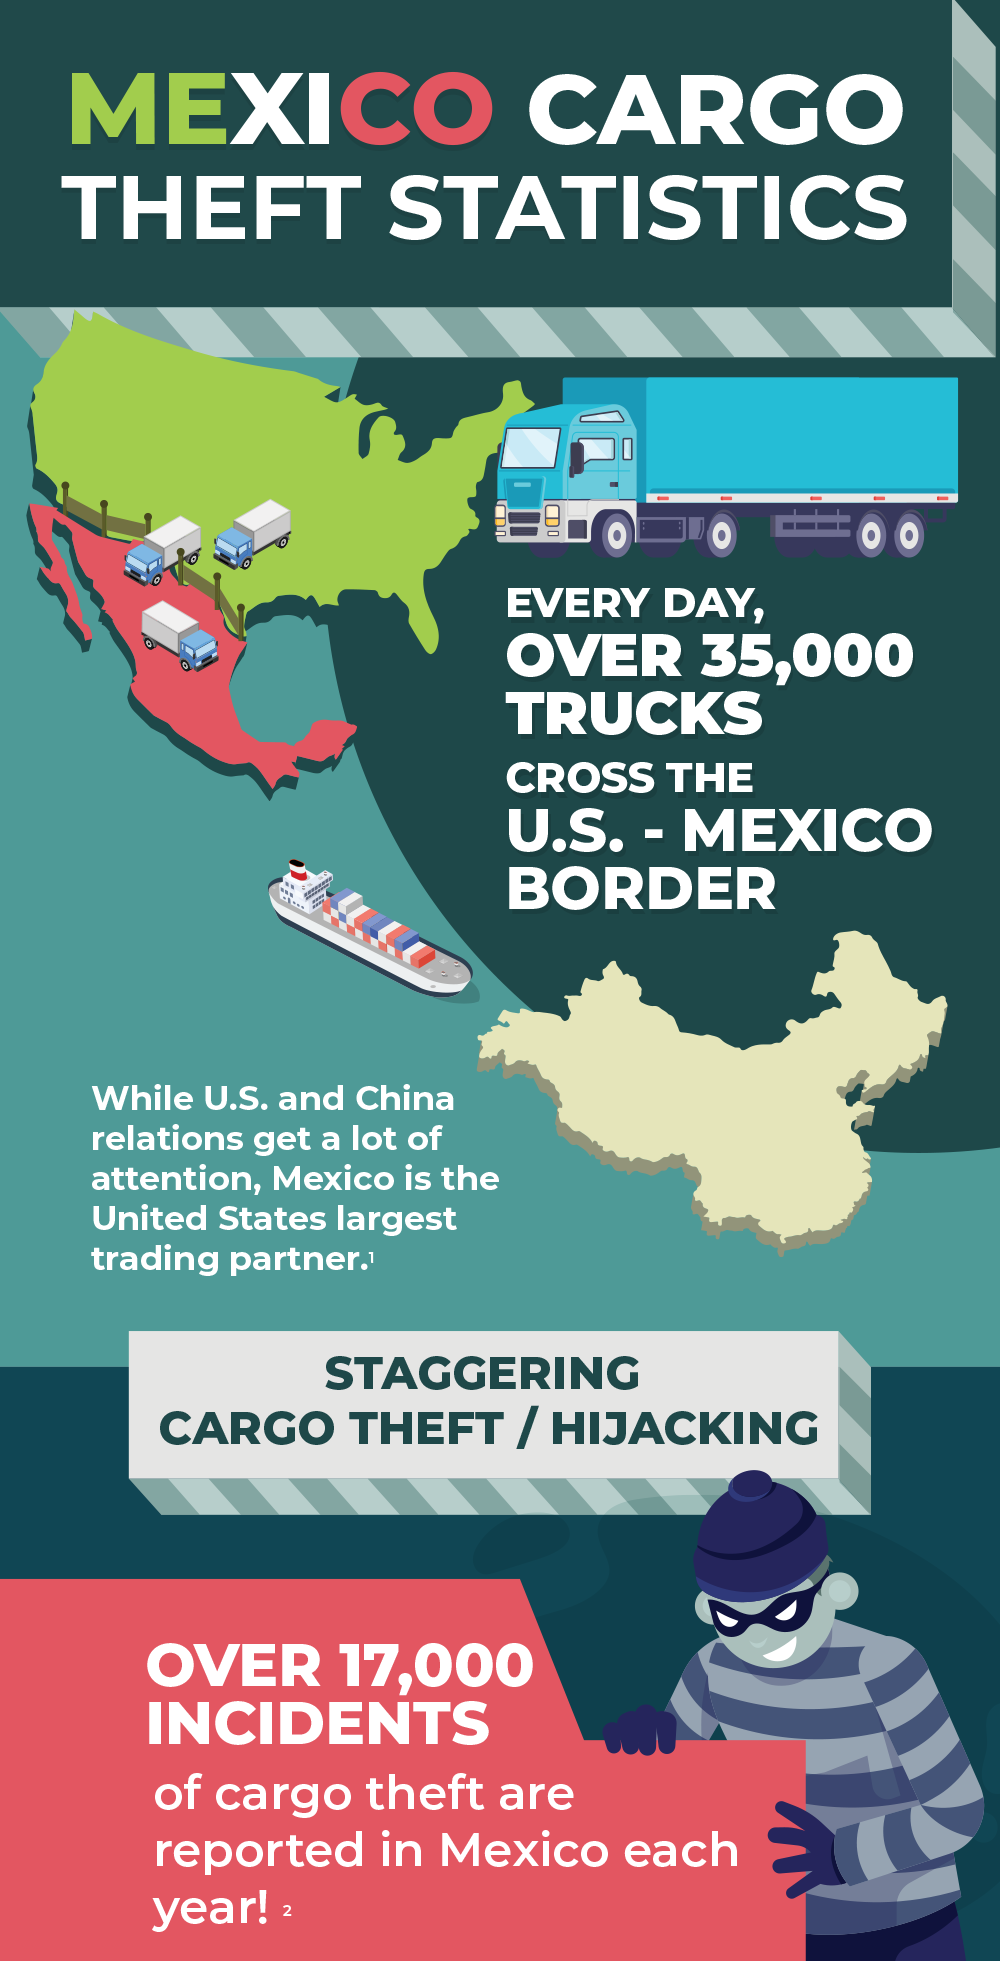 Mexico Cargo Theft Statistics